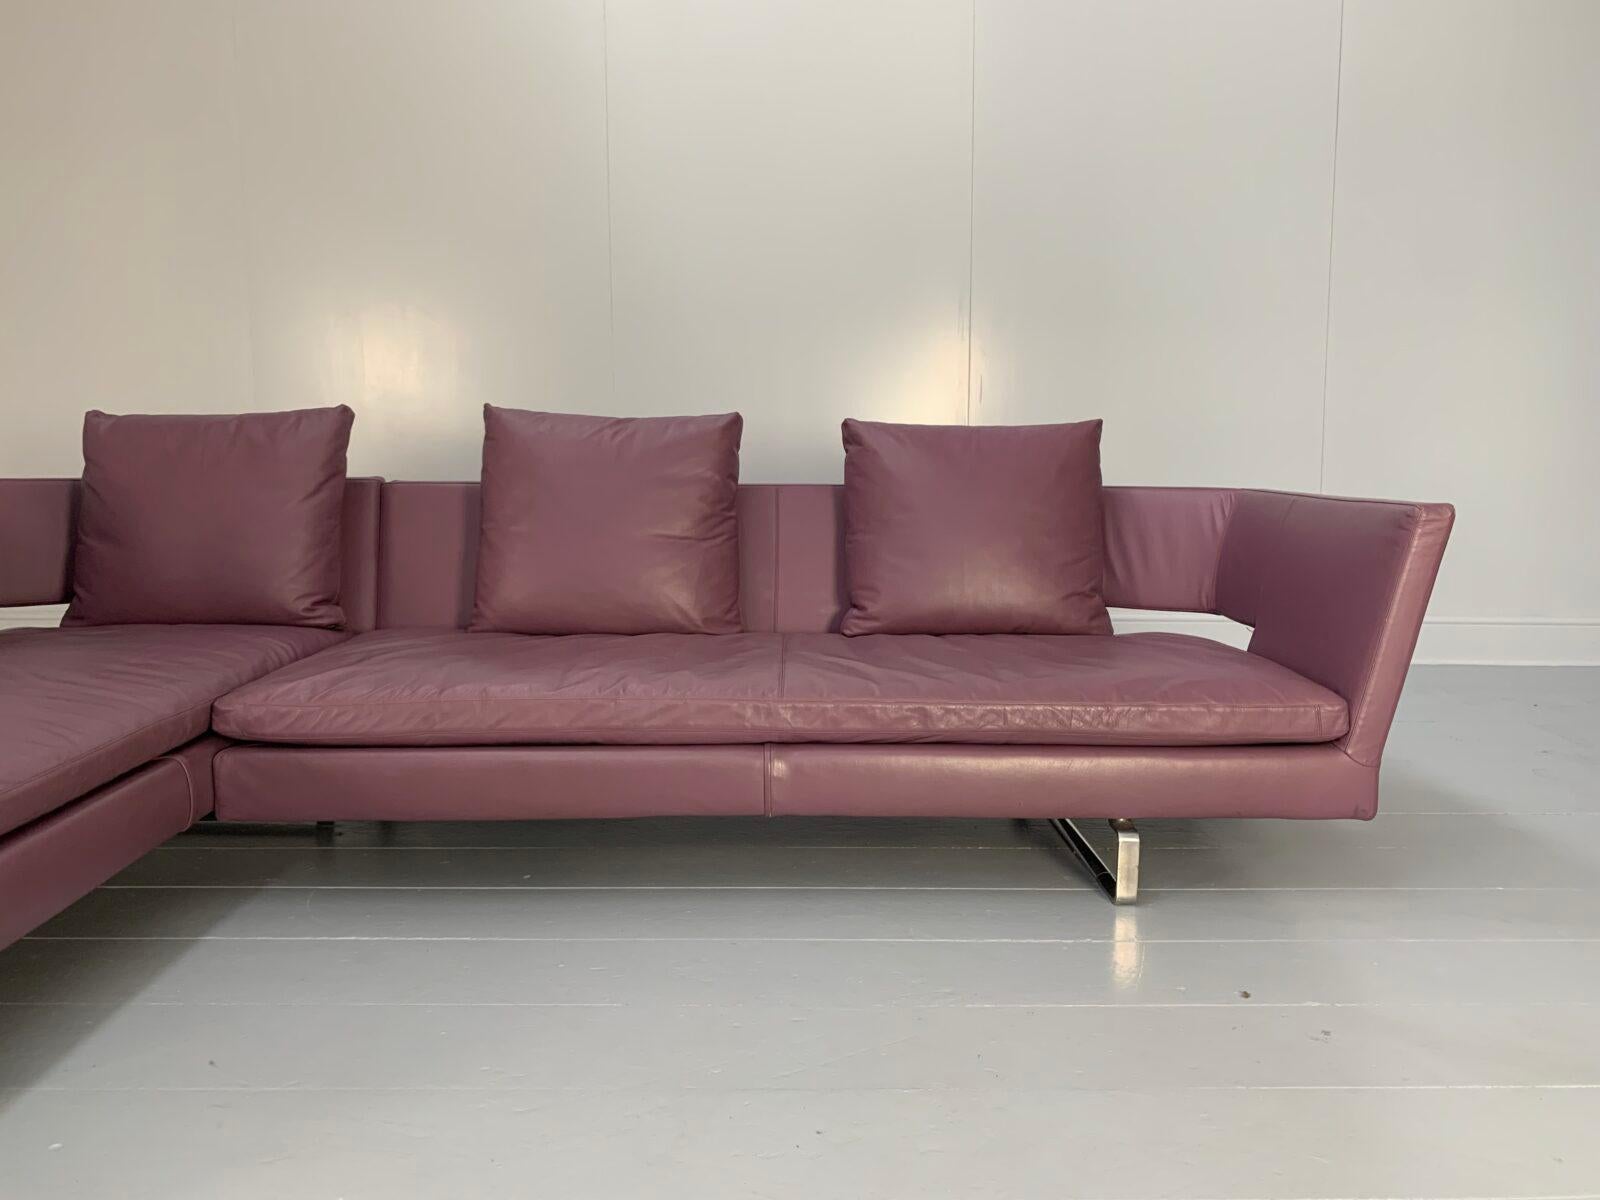 B&B Italia “Arne” 6-Seat L-Shape Sofa – In Mauve Pale-Purple “Gamma” Leather In Good Condition For Sale In Barrowford, GB